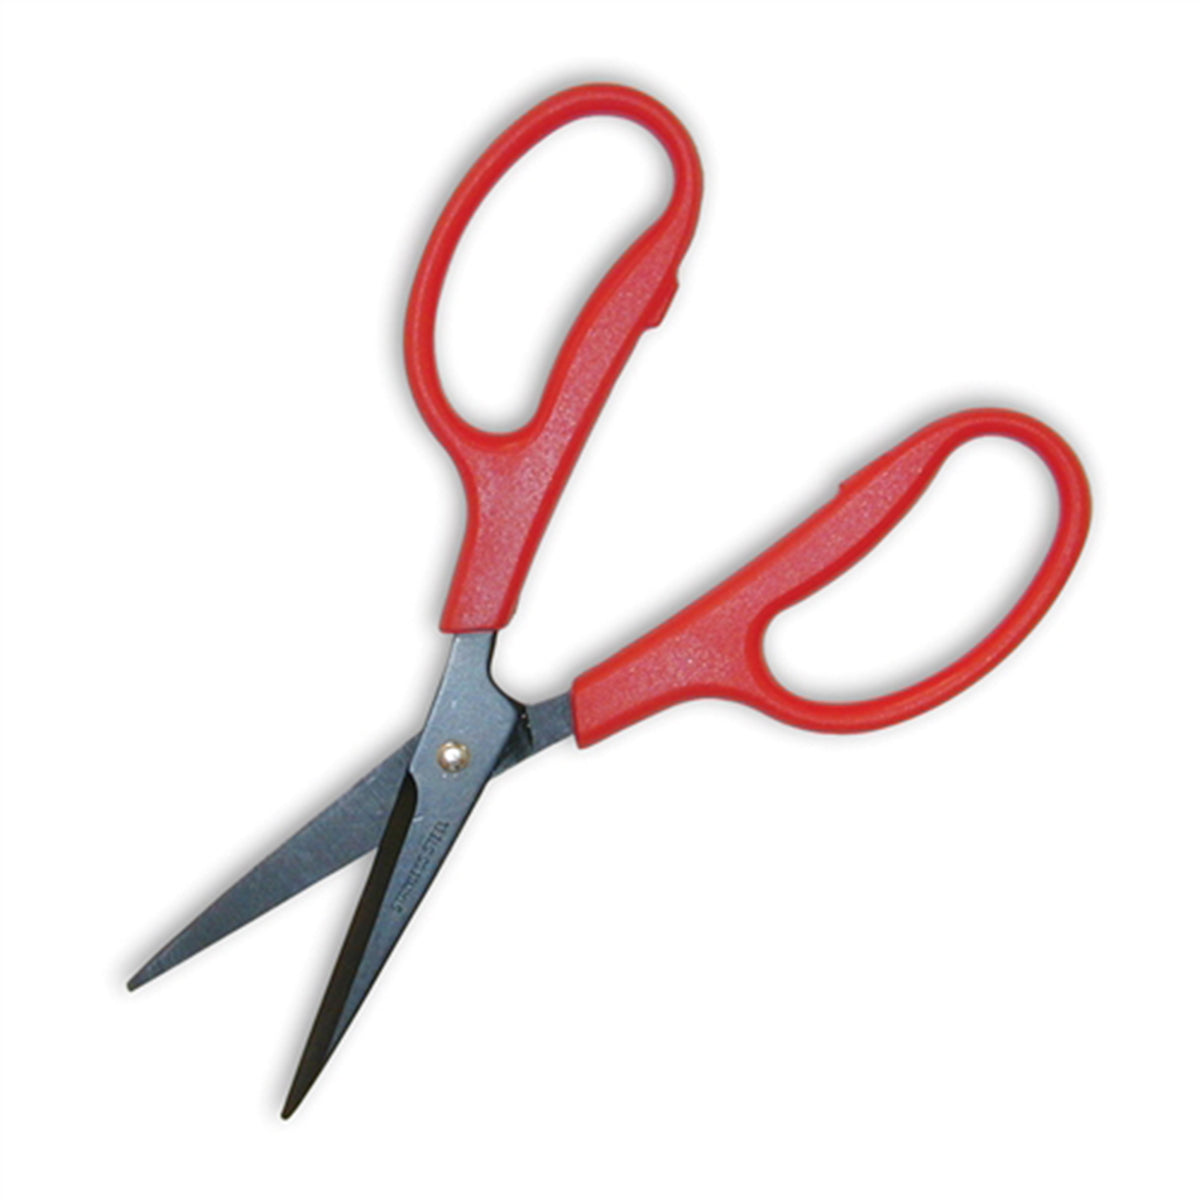 Leatherman Scissors - Red - 1013